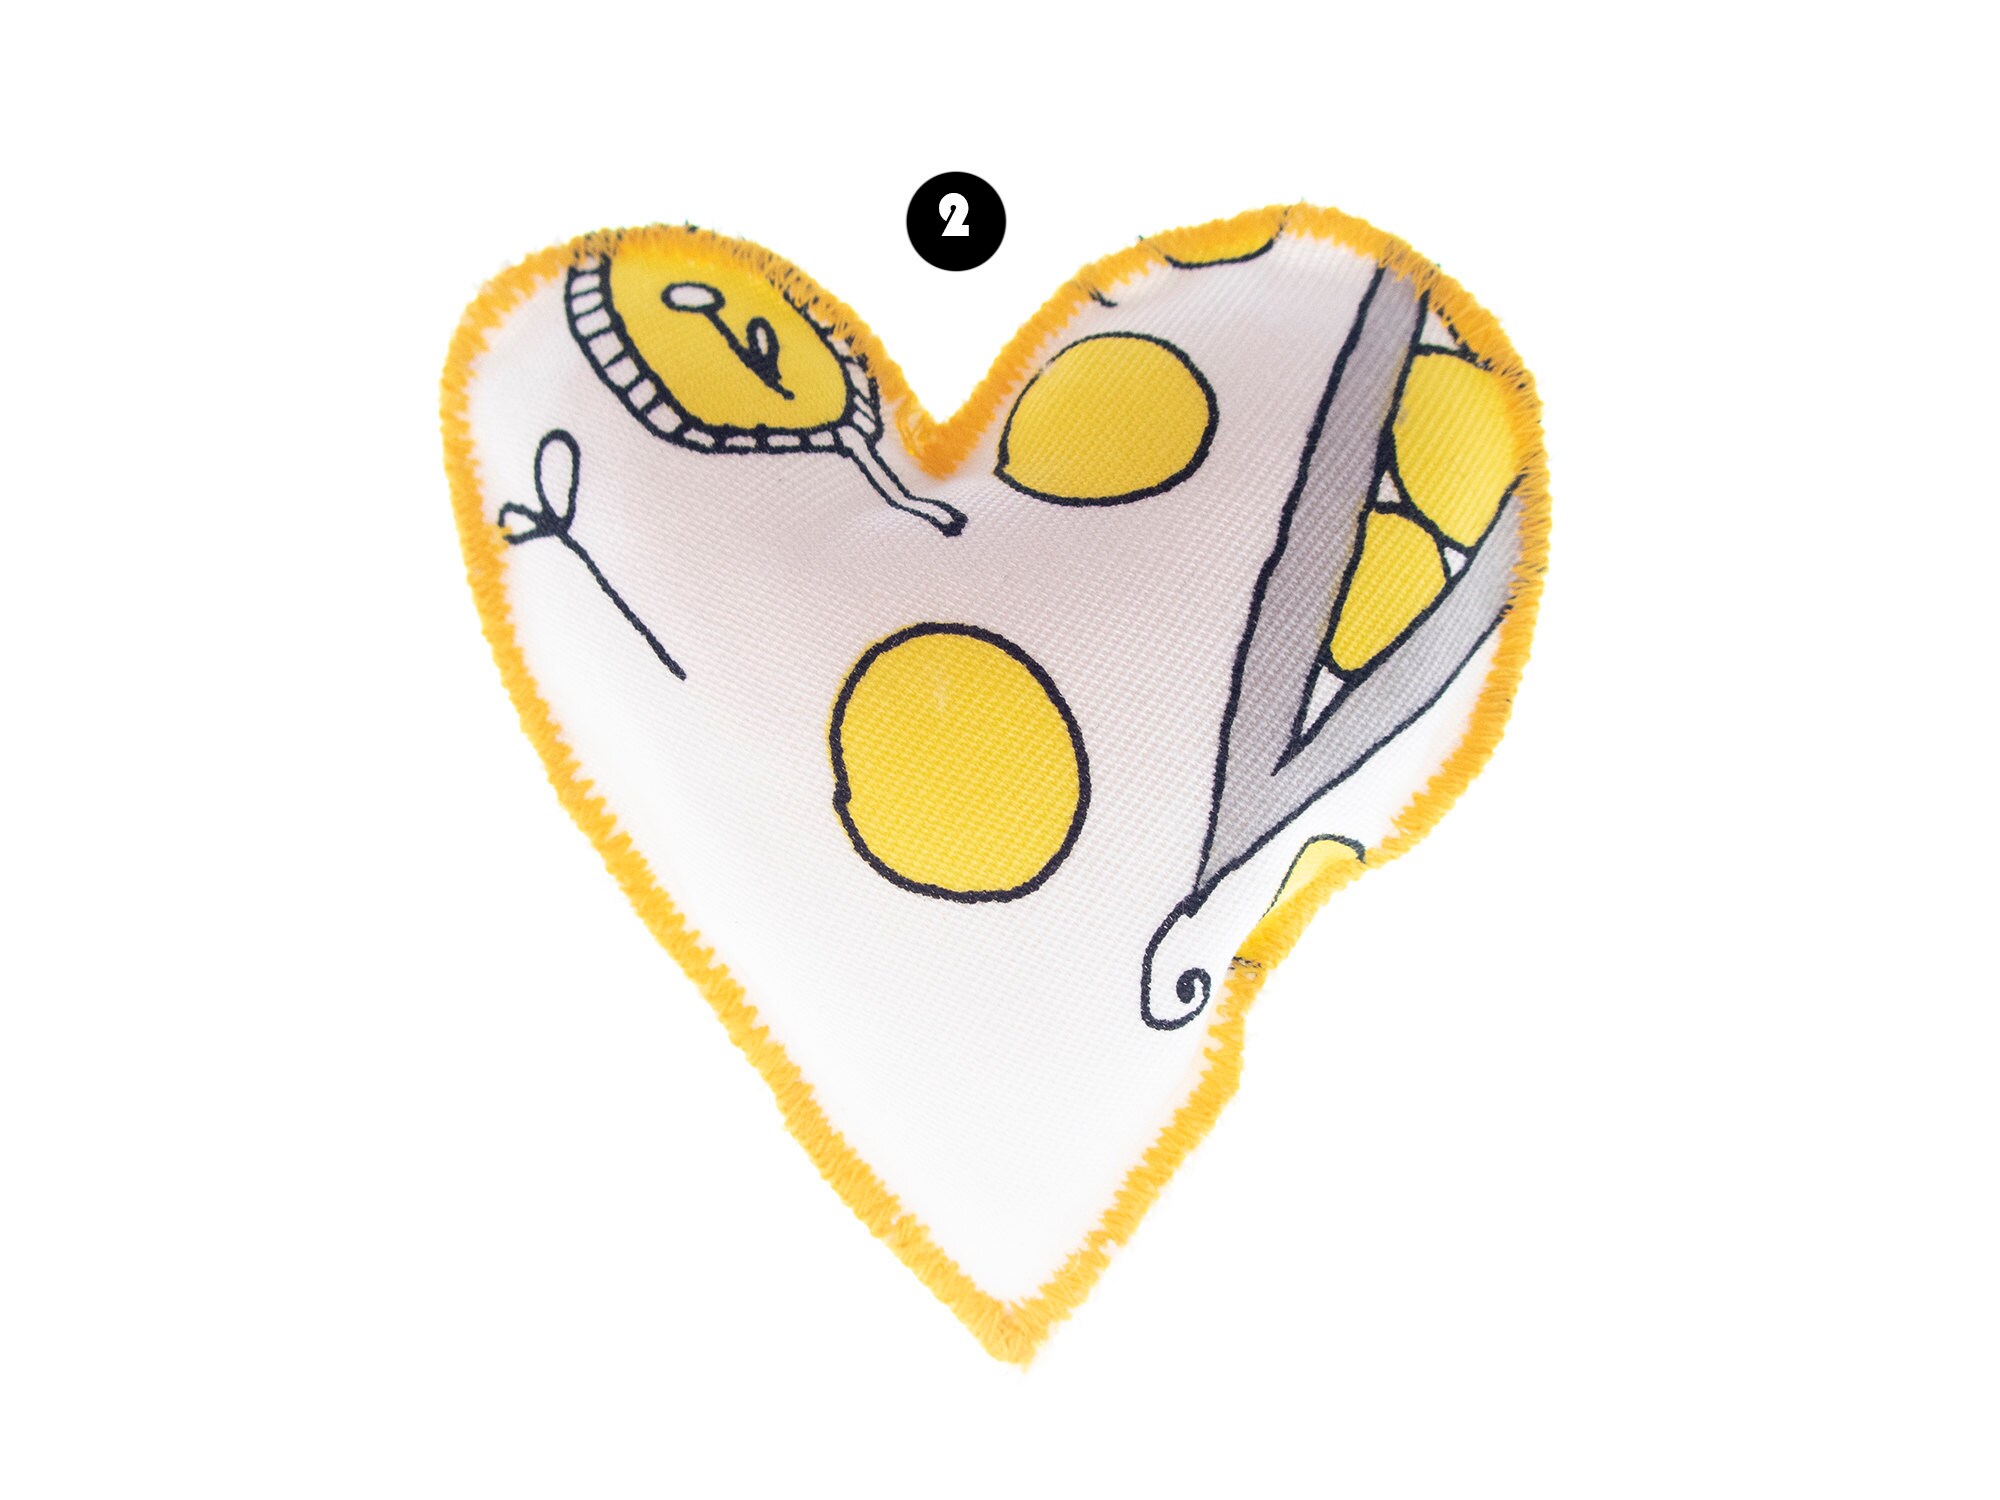 handmade fabric heart ornament, fabric heart decoration